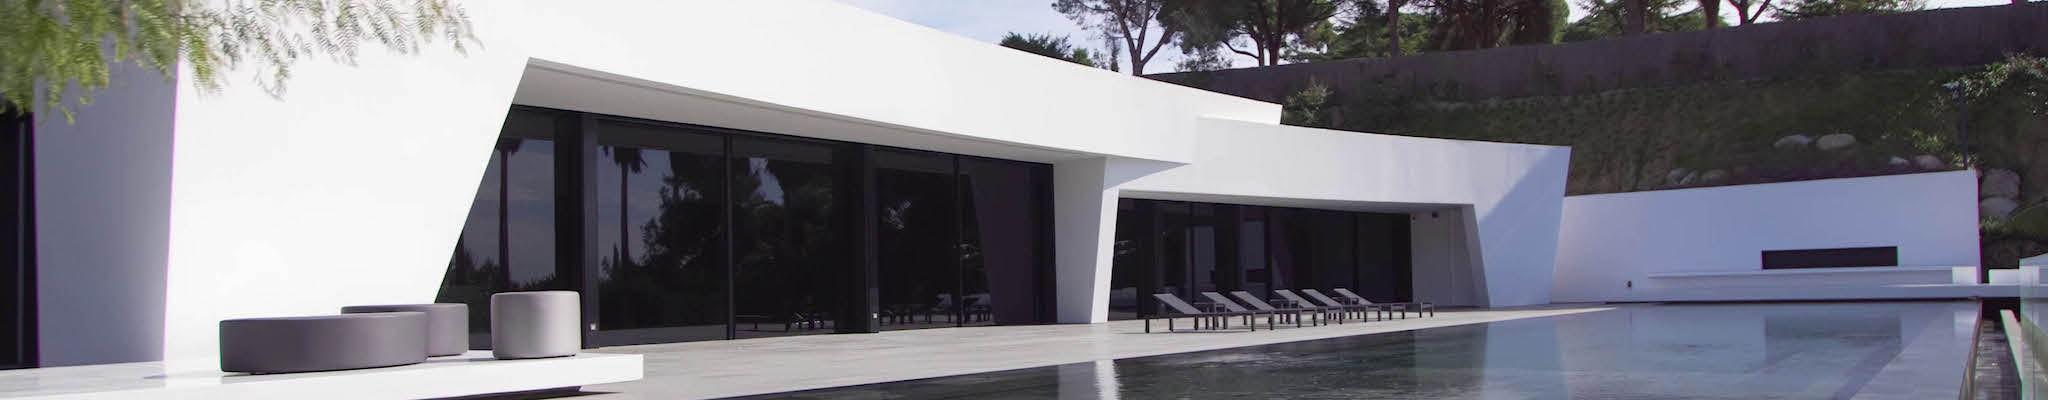 portfolio-video-arquitectura-the-noor-house-header-2048px